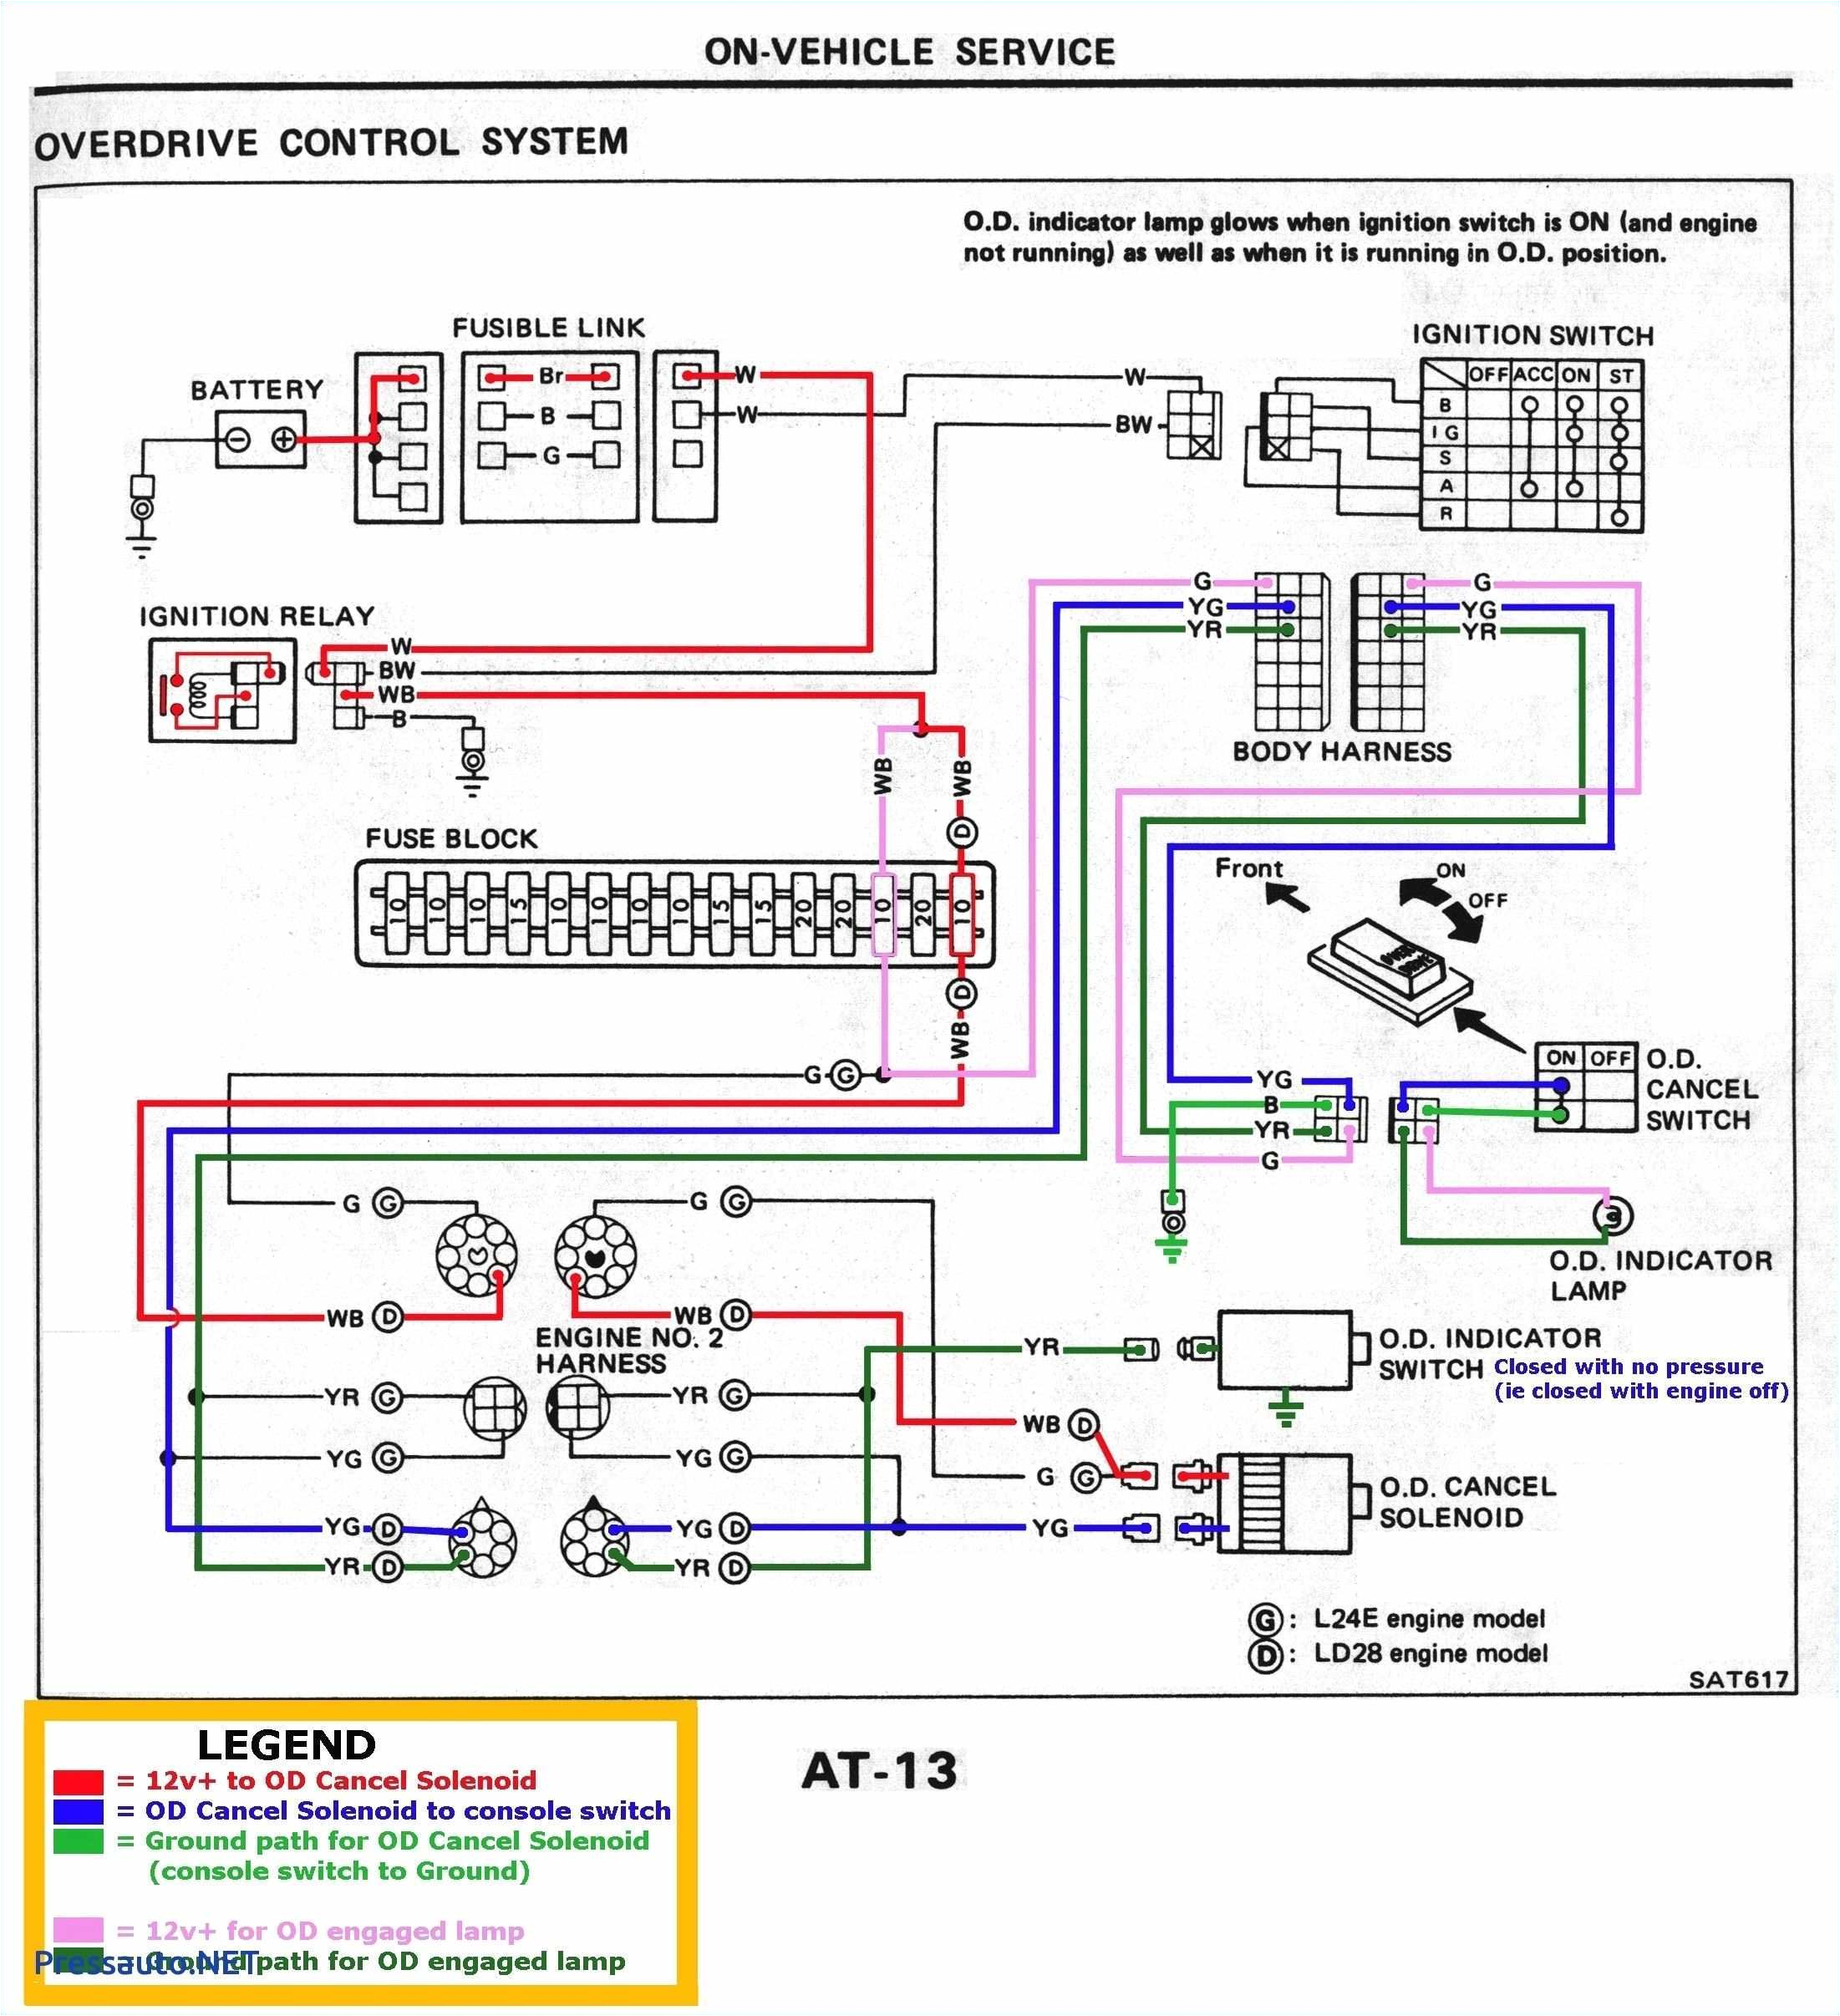 vr3 car stereo wiring harness schema wiring diagram vr3 car stereo wire harness